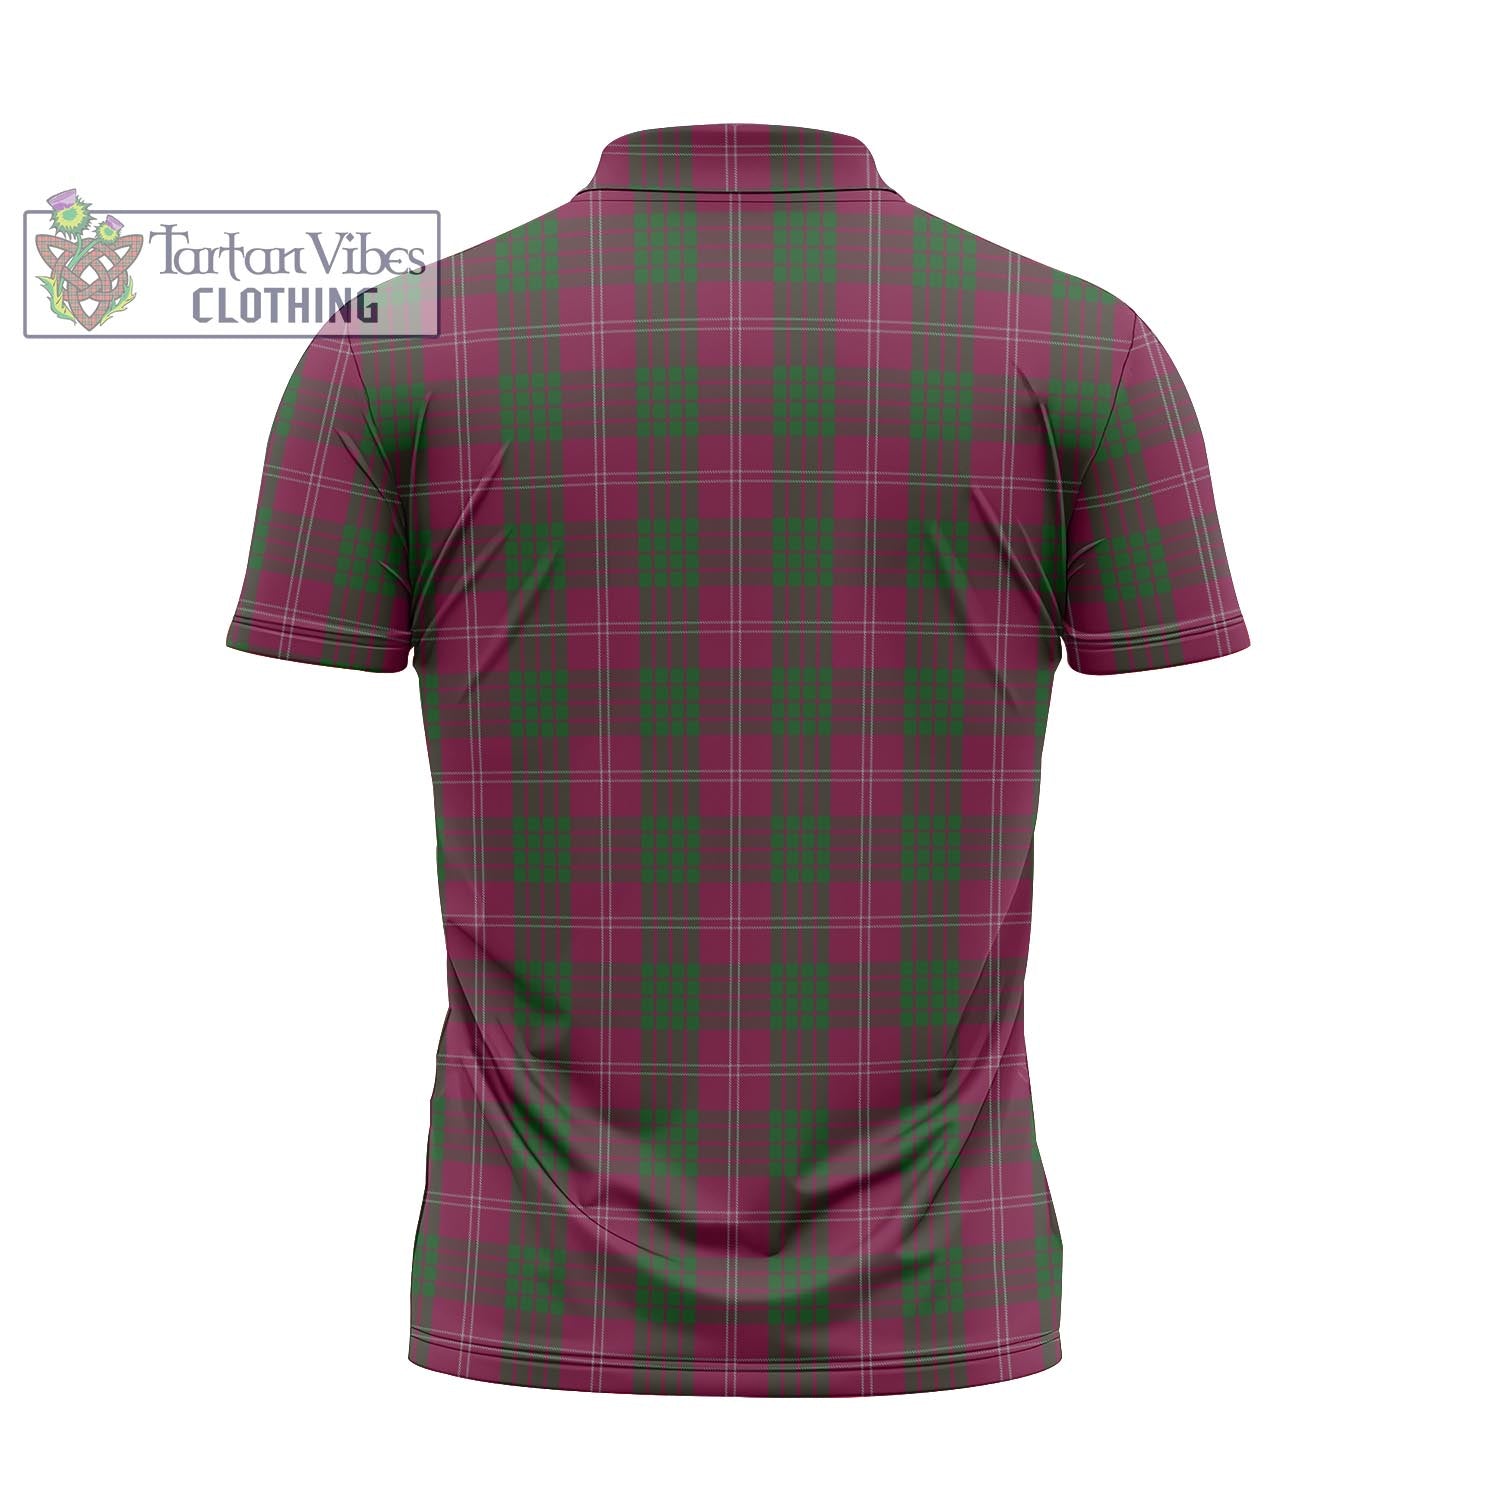 Tartan Vibes Clothing Crawford Tartan Zipper Polo Shirt with Family Crest